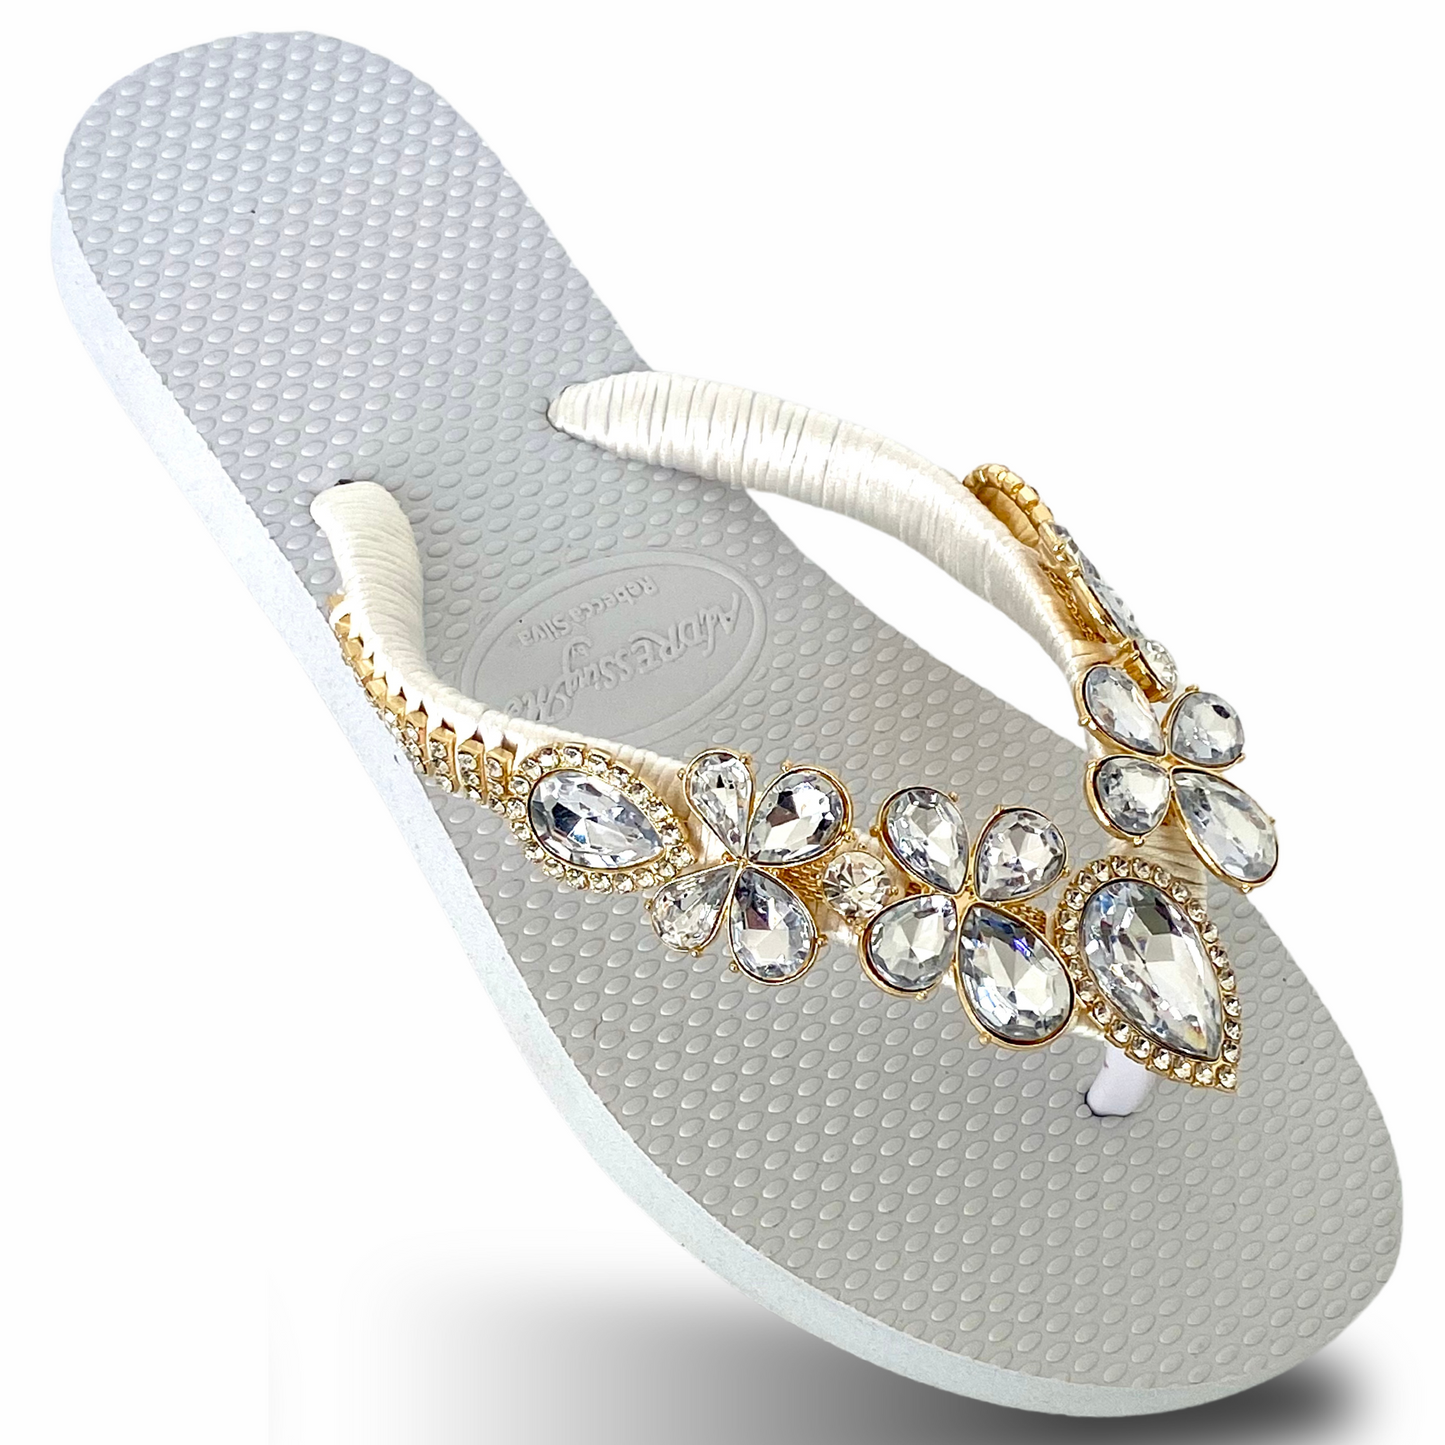 AdDRESSingMe™ Luxurious White Flip Flops With Rhinestones